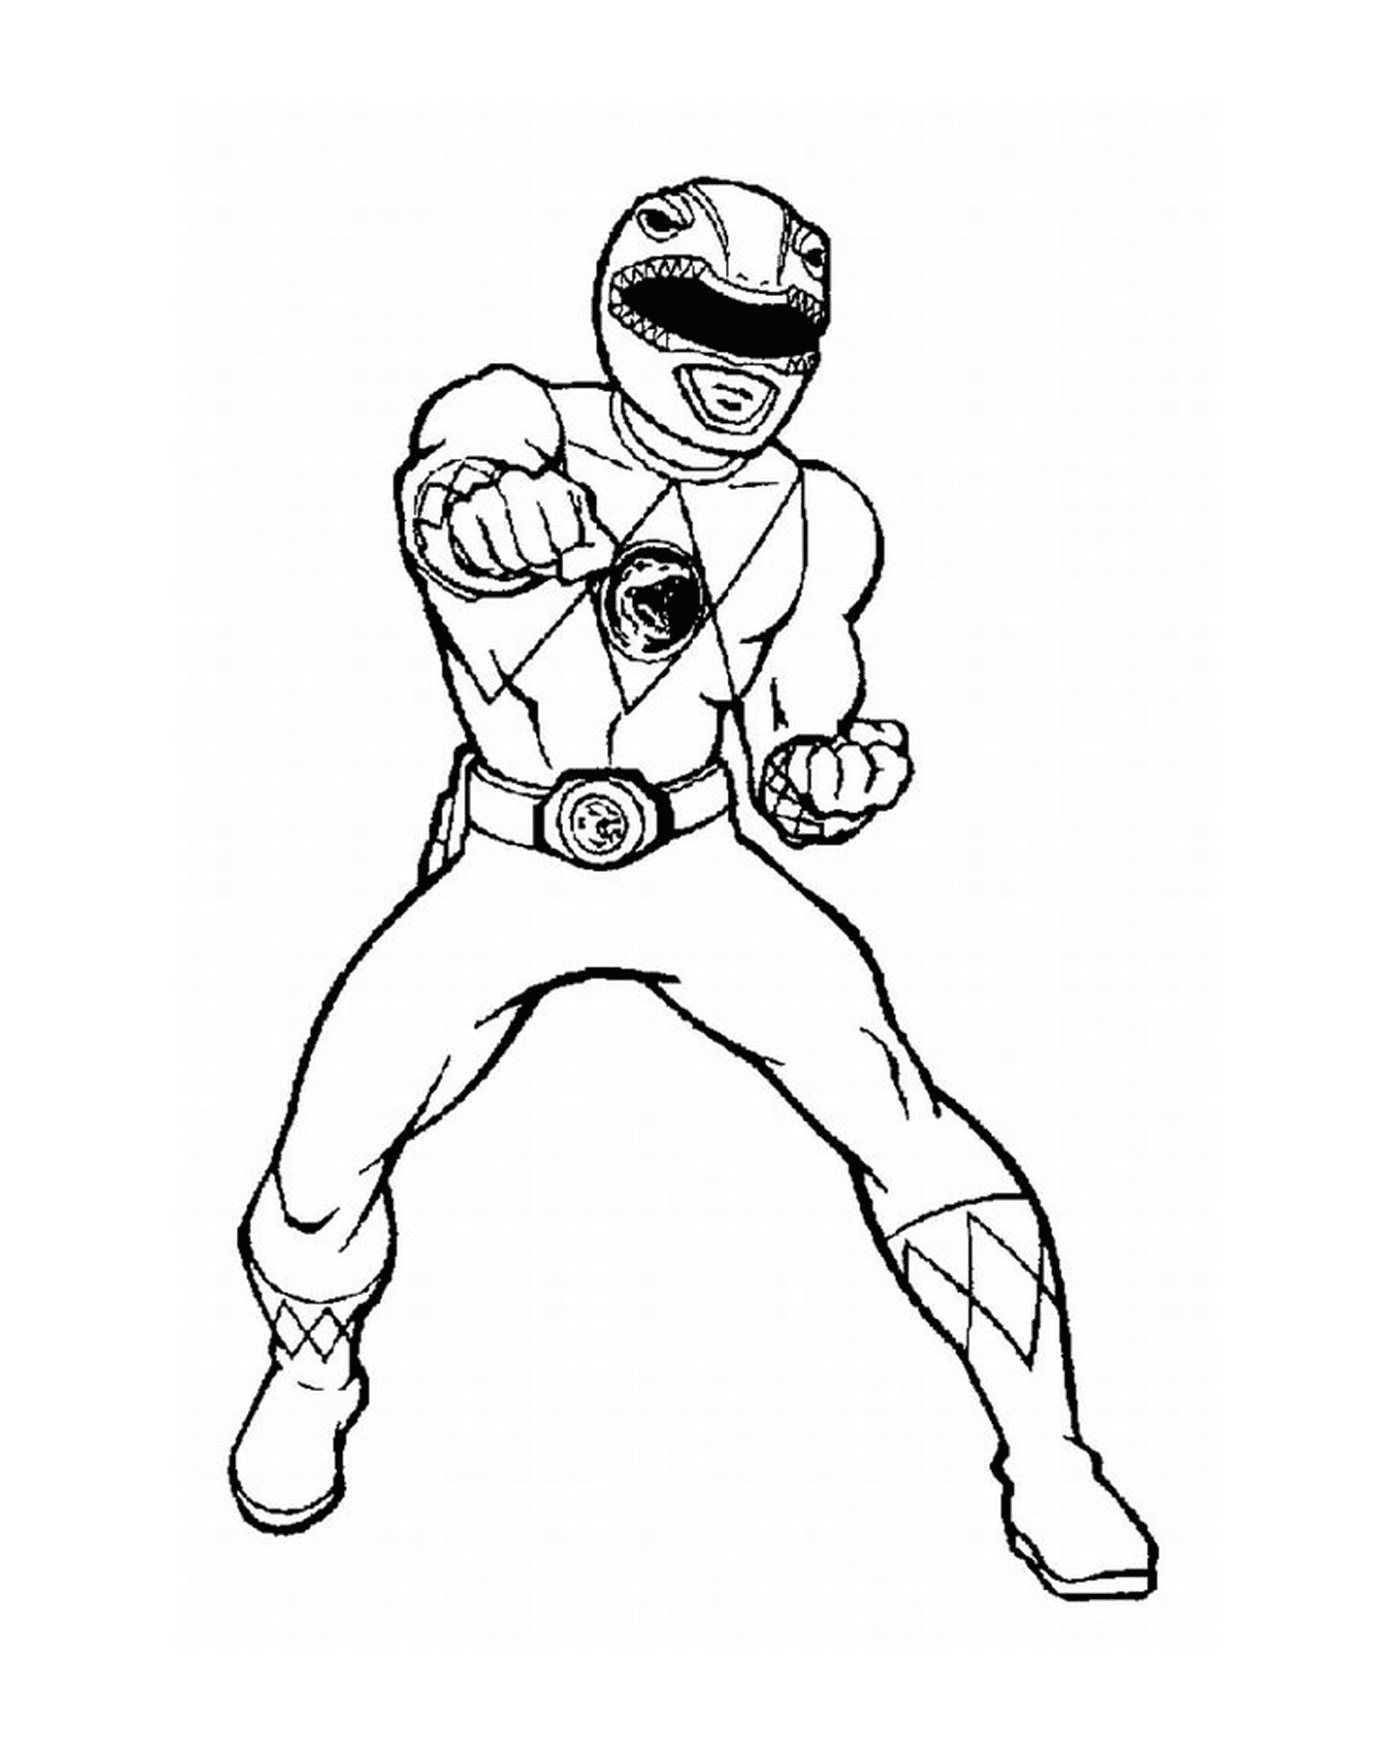  Jungle Fury's Power Ranger übt Karate 